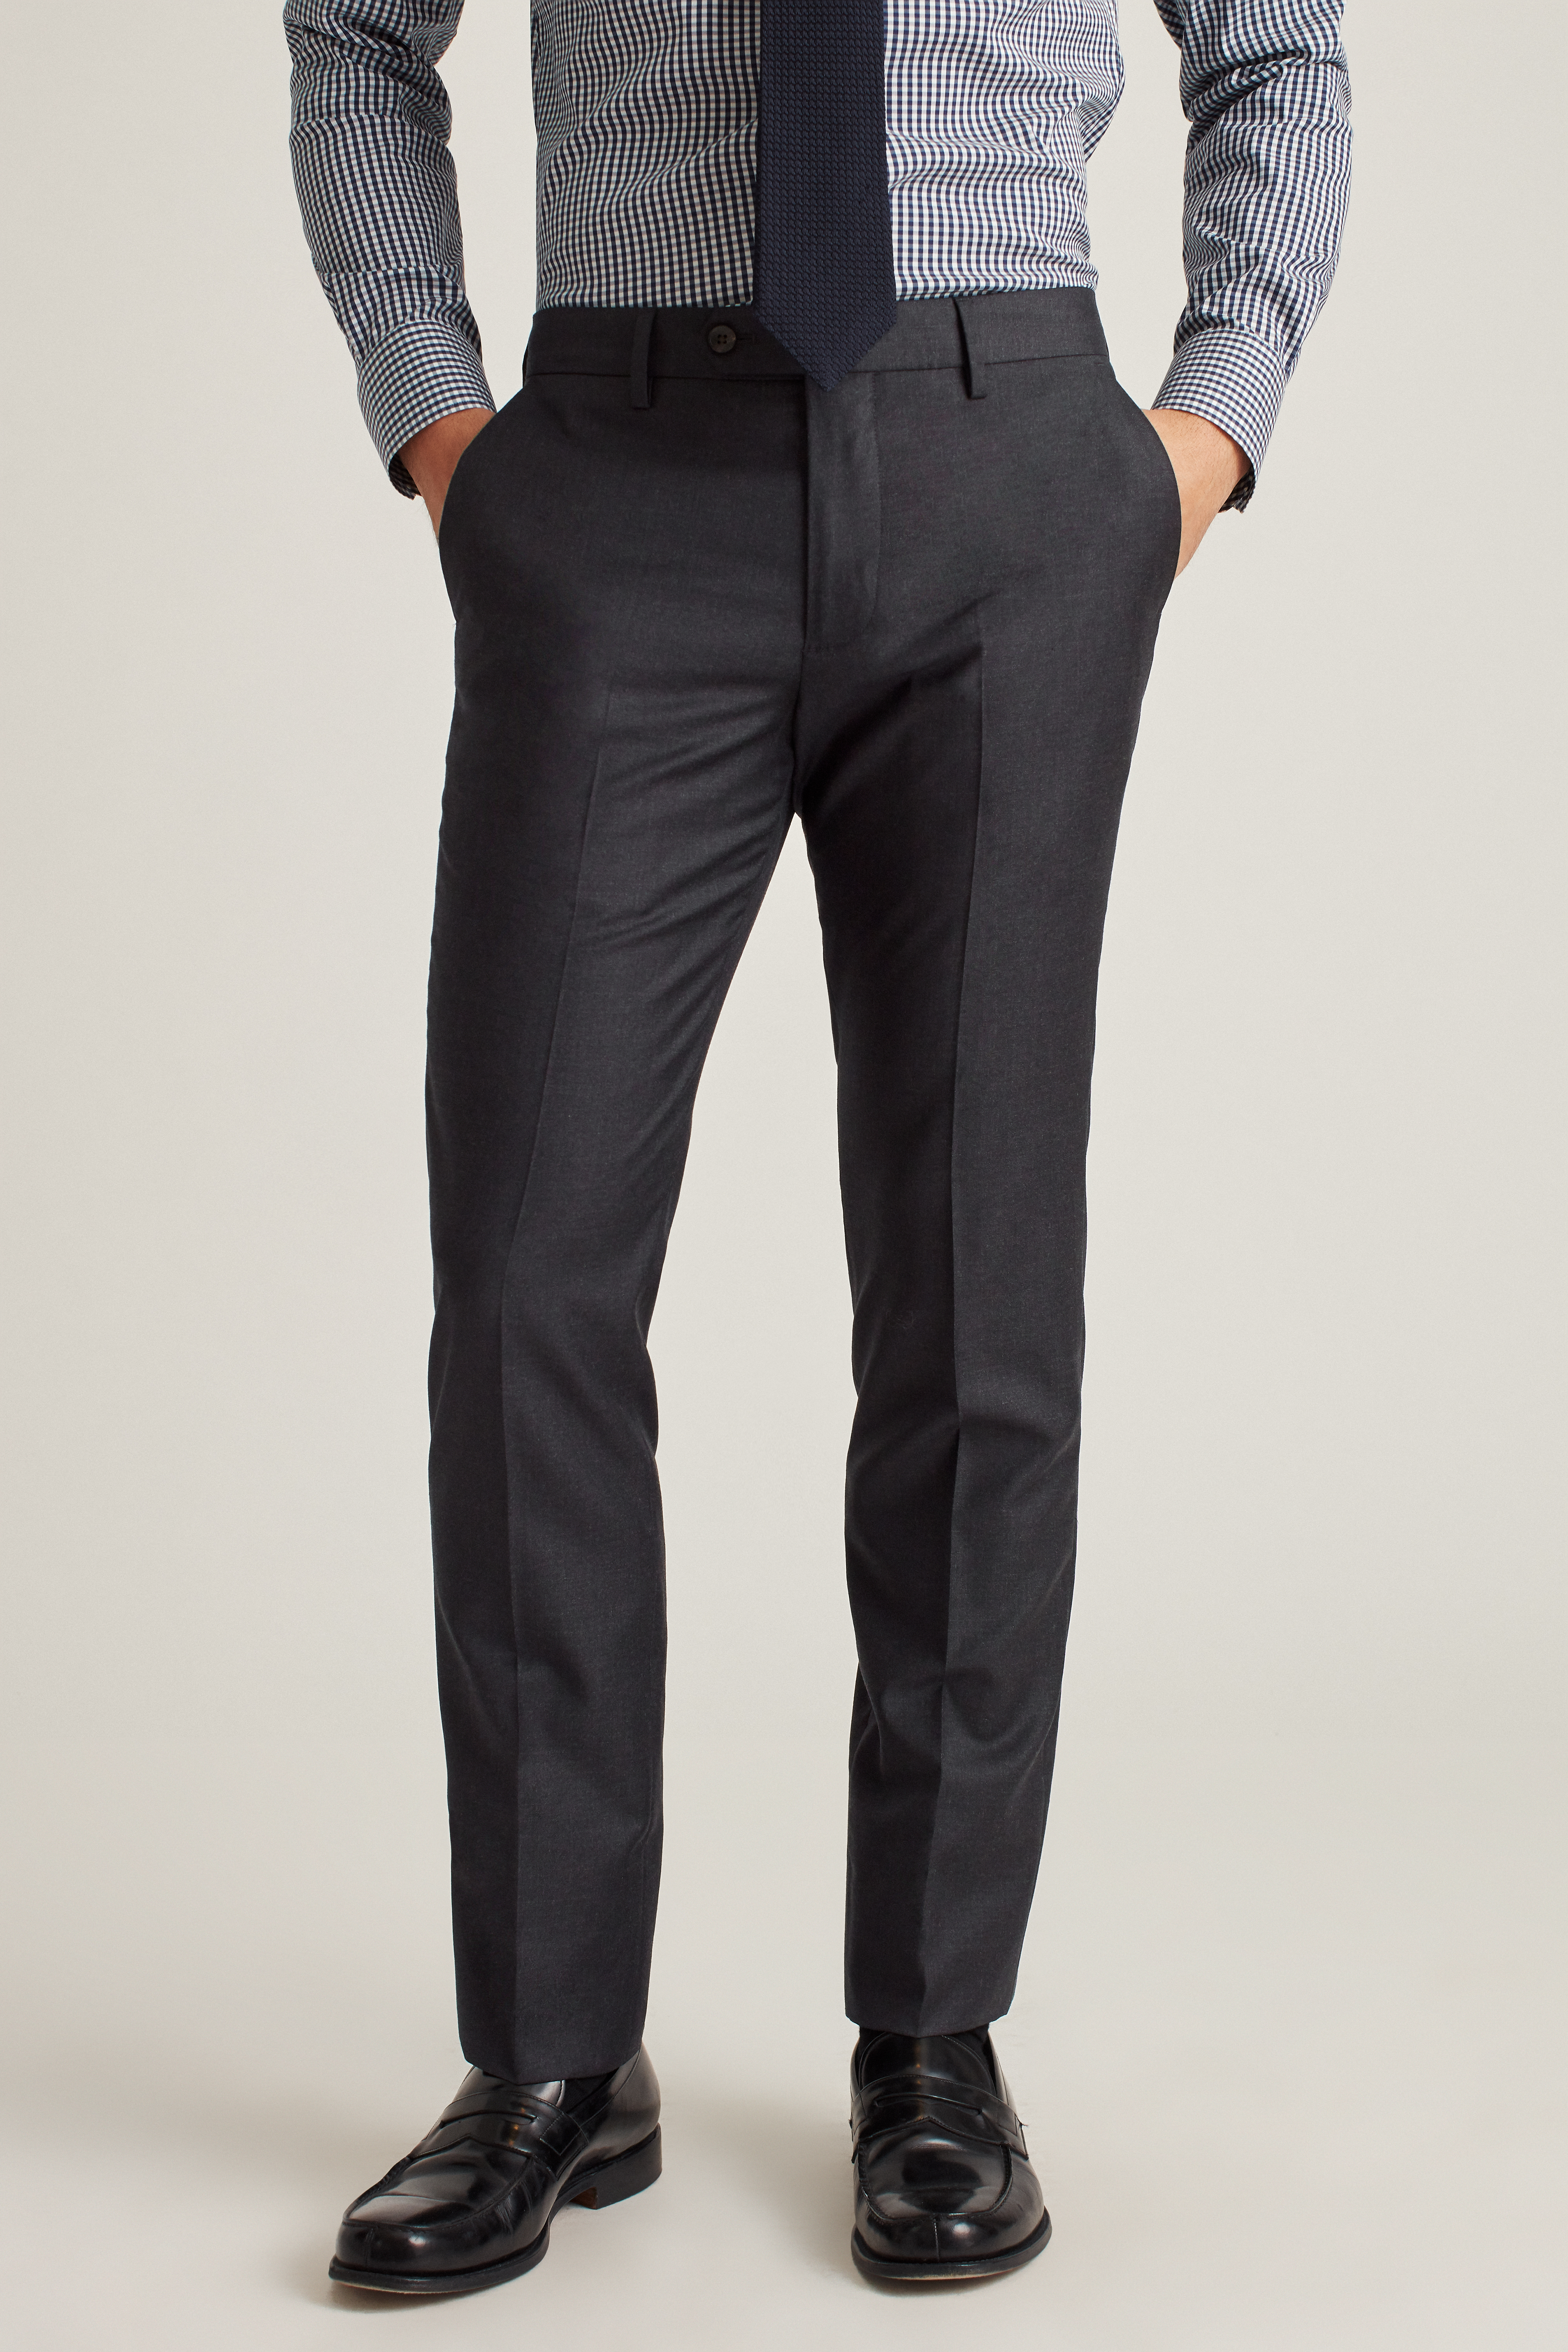 Charles Tyrwhitt Slim Fit Italian Luxury Trousers, Ink Blue at John Lewis &  Partners